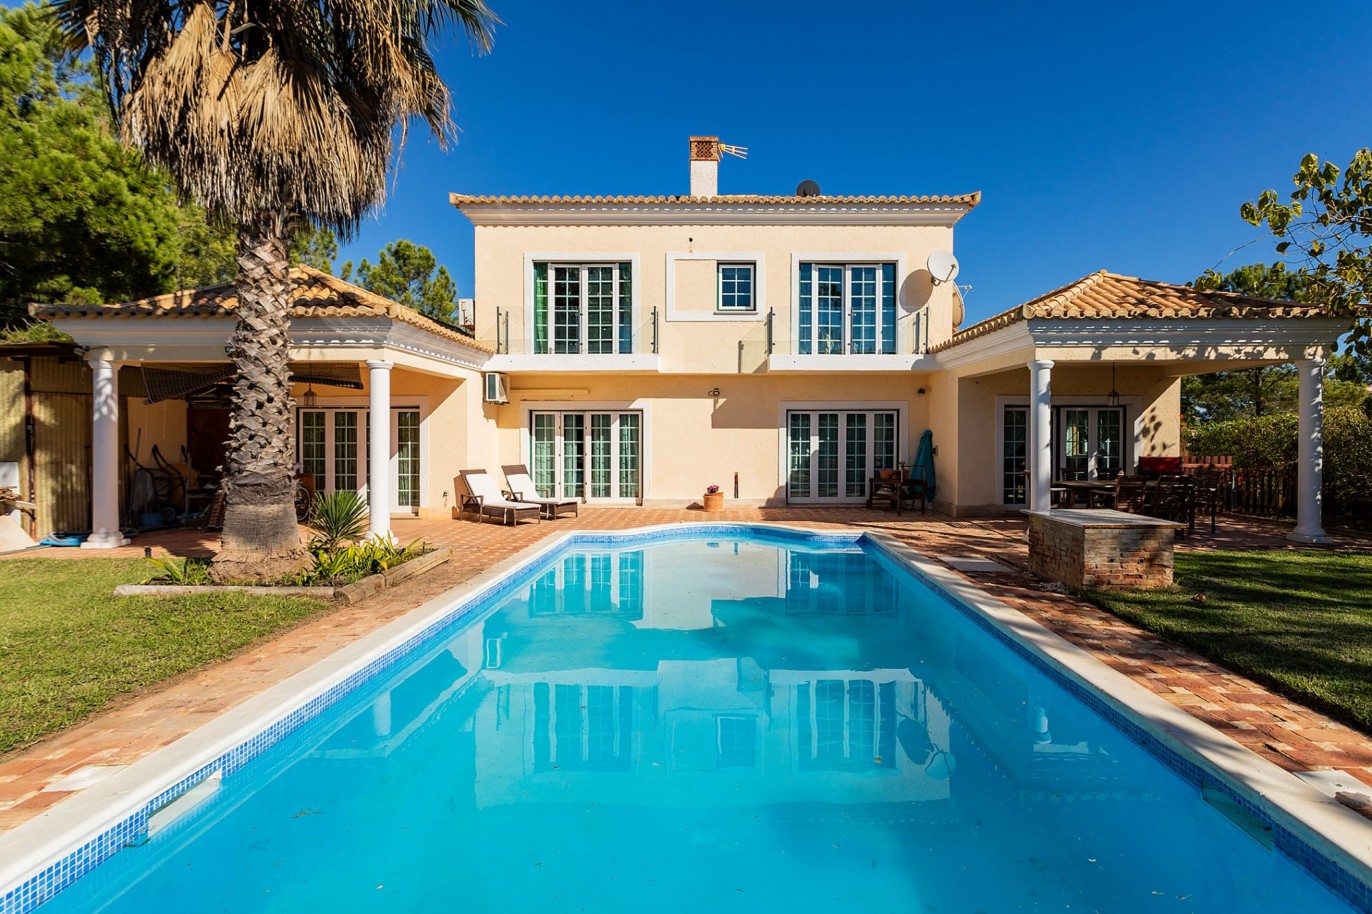 Moradia V4, com piscina, para venda, em Vila Sol, Algarve_204074